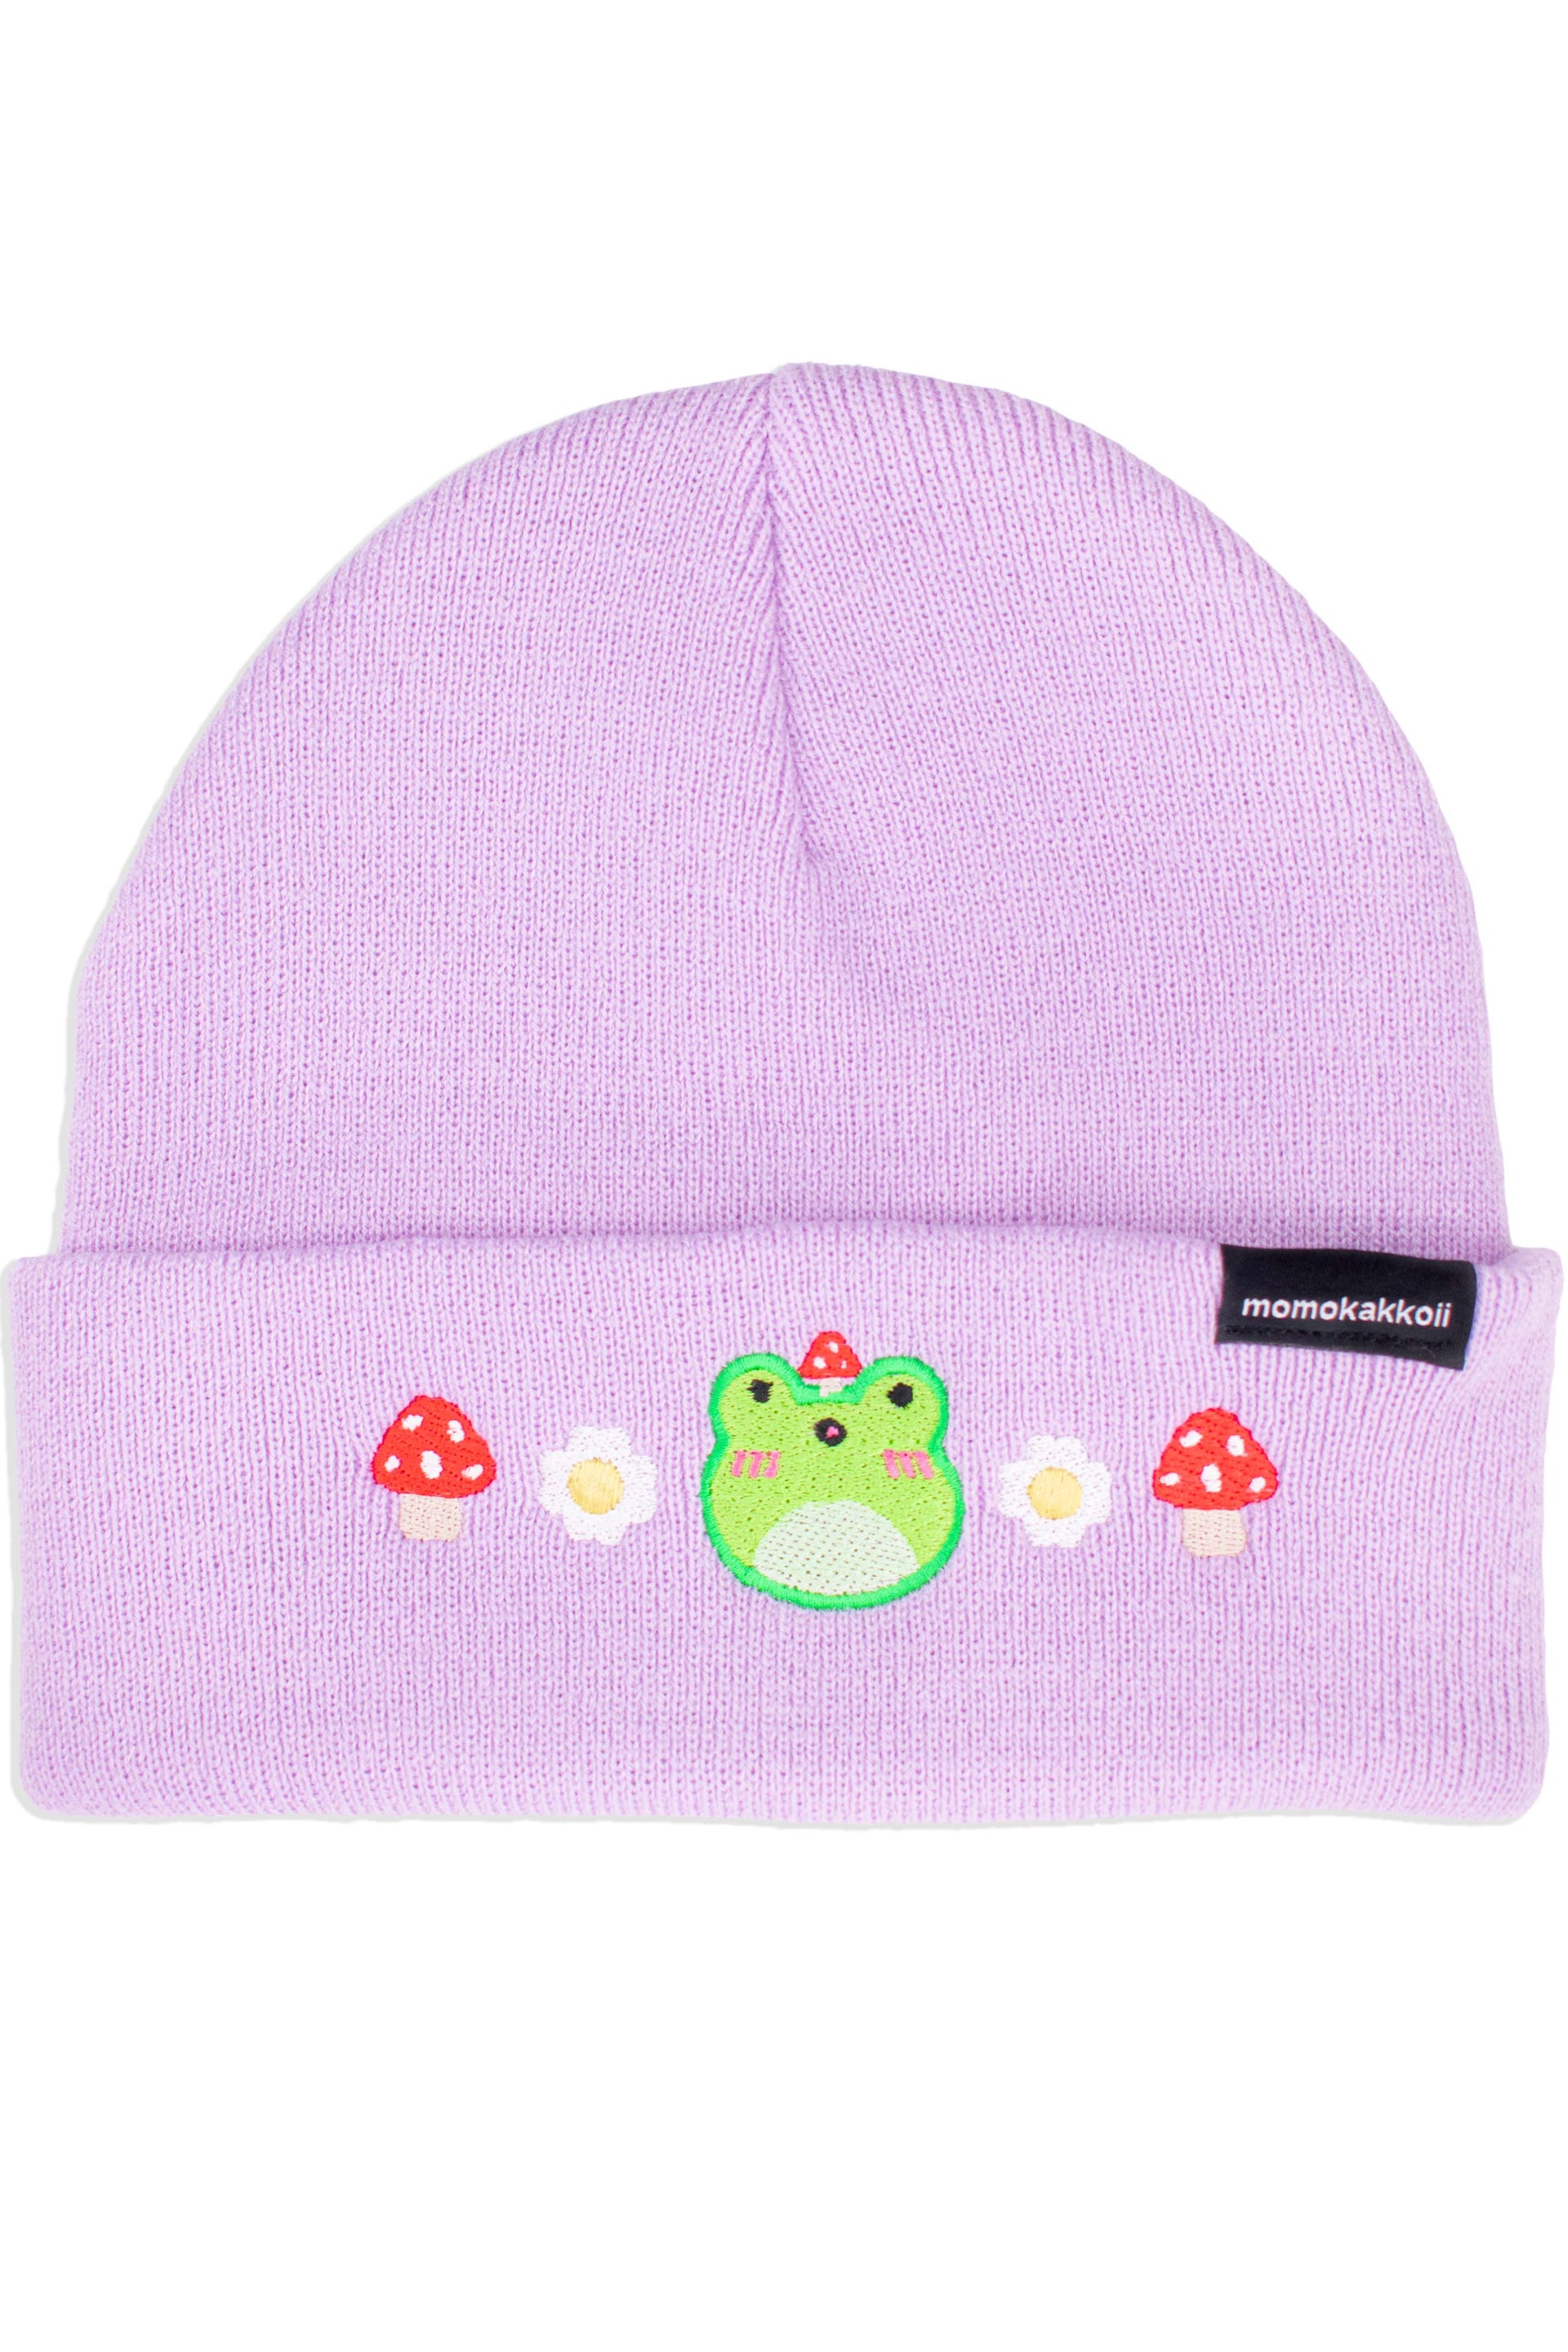 Cute Froggy & Mushrooms Embroidered Beanie - Momokakkoii